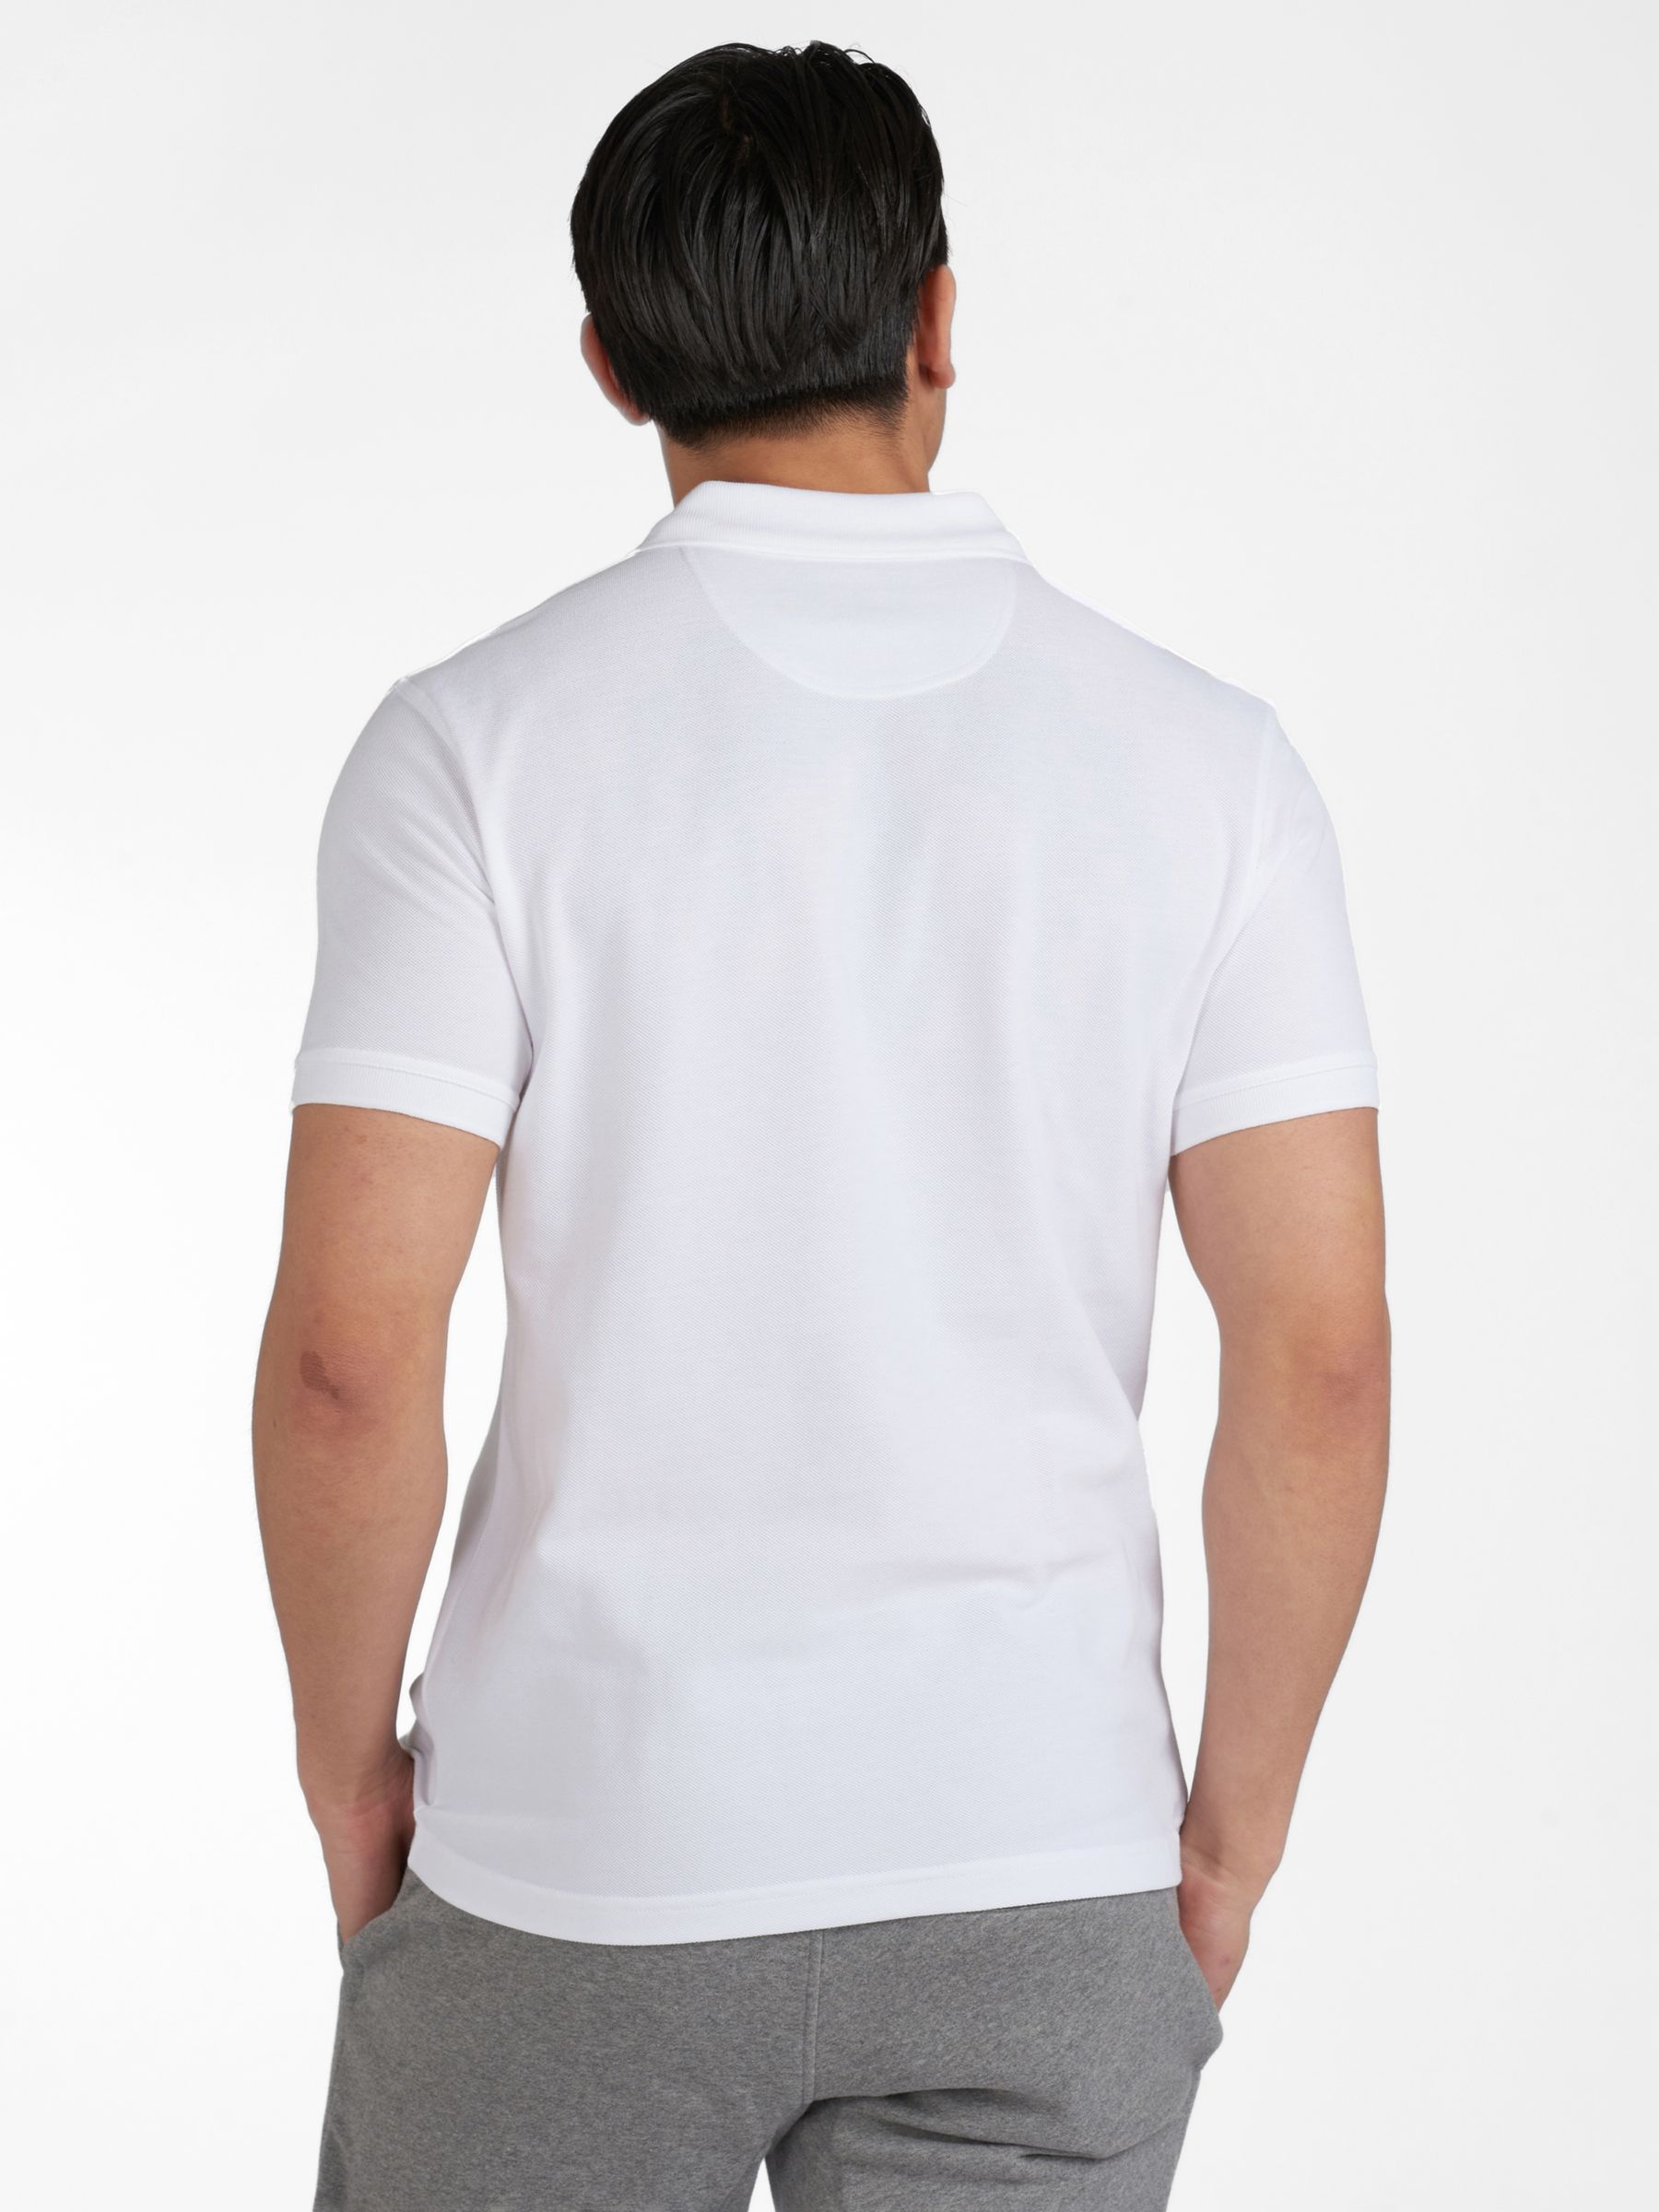 Barbour International Polo Shirt, White, S